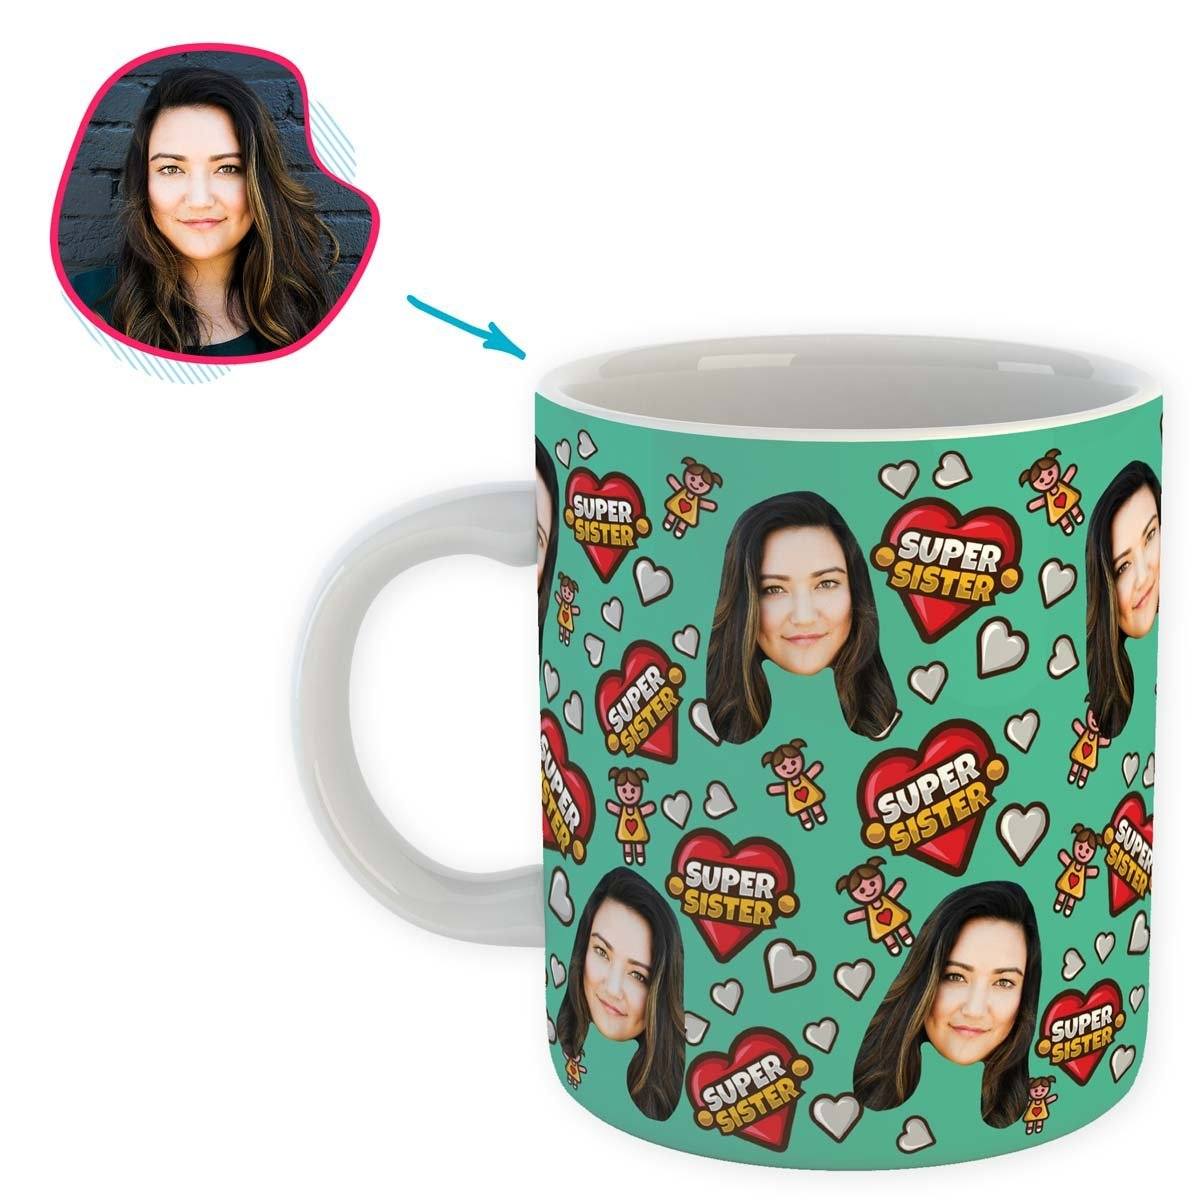 Super Sister Personalized Mug